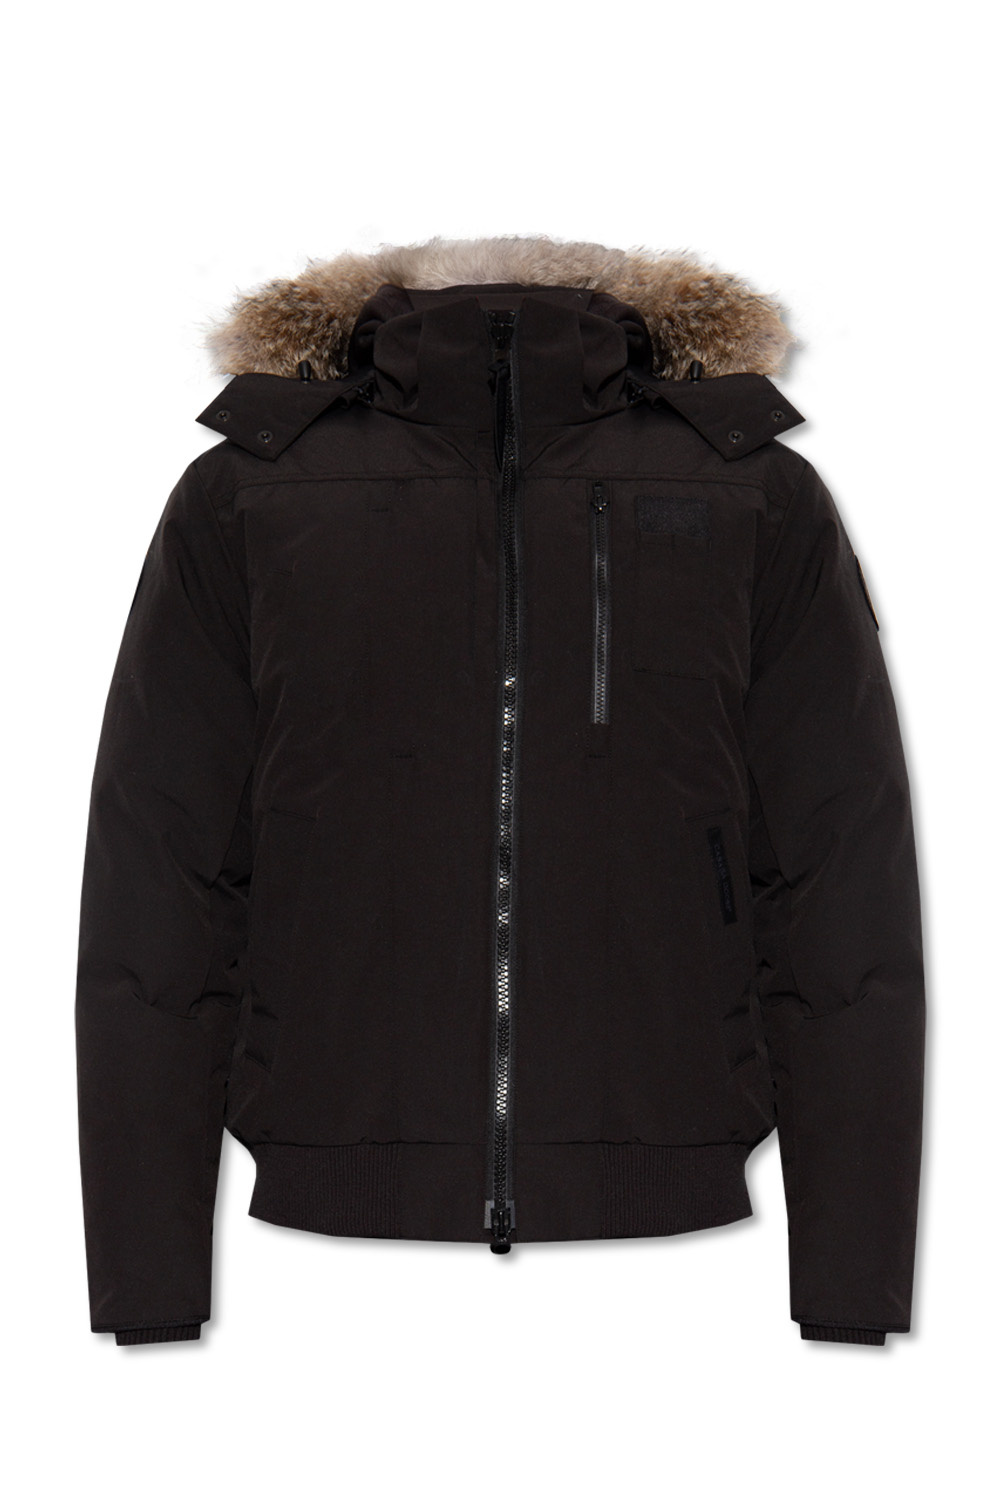 Black Down jacket Canada Goose - Vitkac Canada